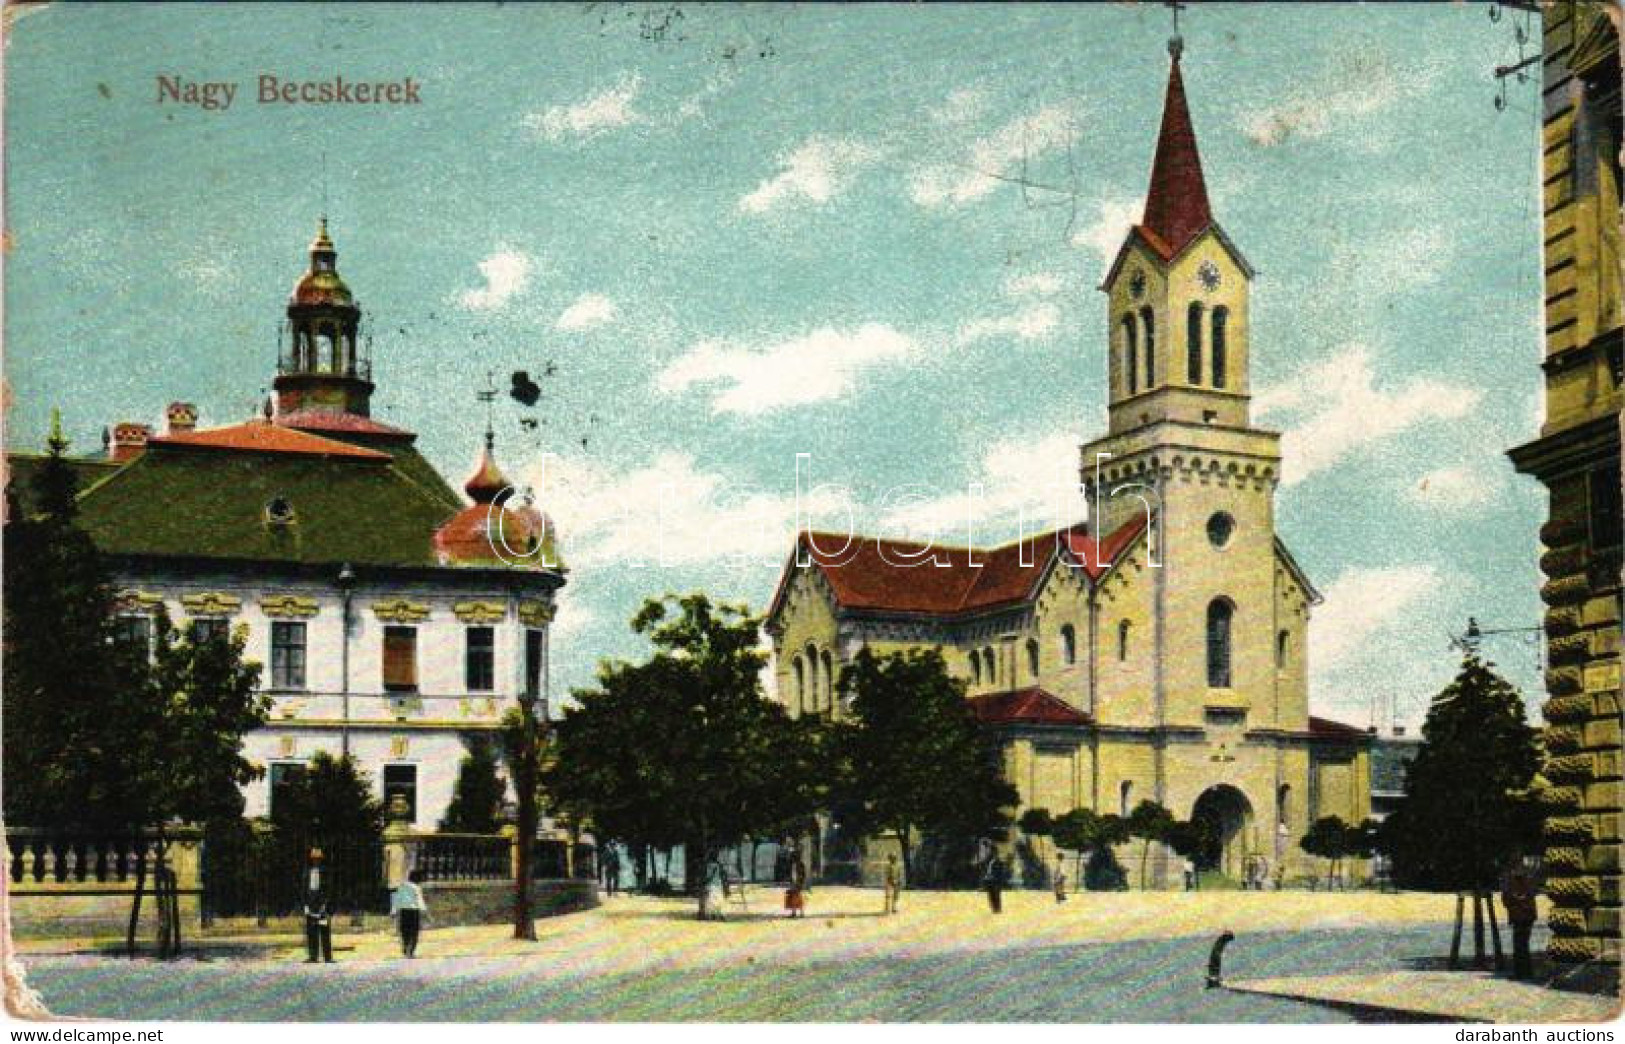 T2/T3 1908 Nagybecskerek, Zrenjanin, Veliki Beckerek; Római Katolikus Templom / Church (EK) - Non Classificati